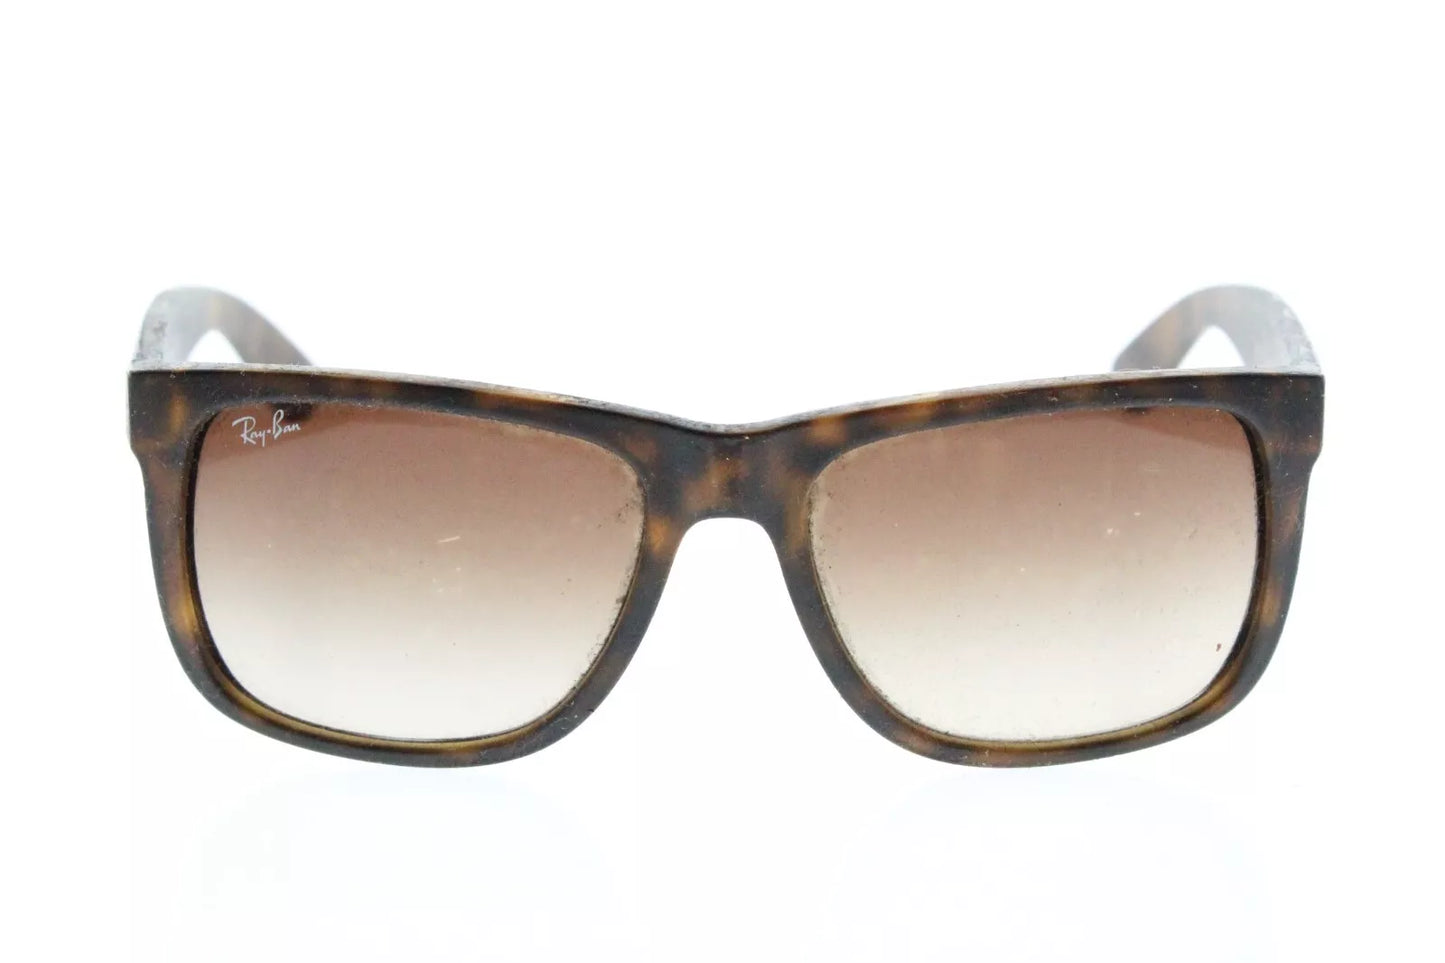 Ray Ban RB4165-710-13-55  New Sunglasses